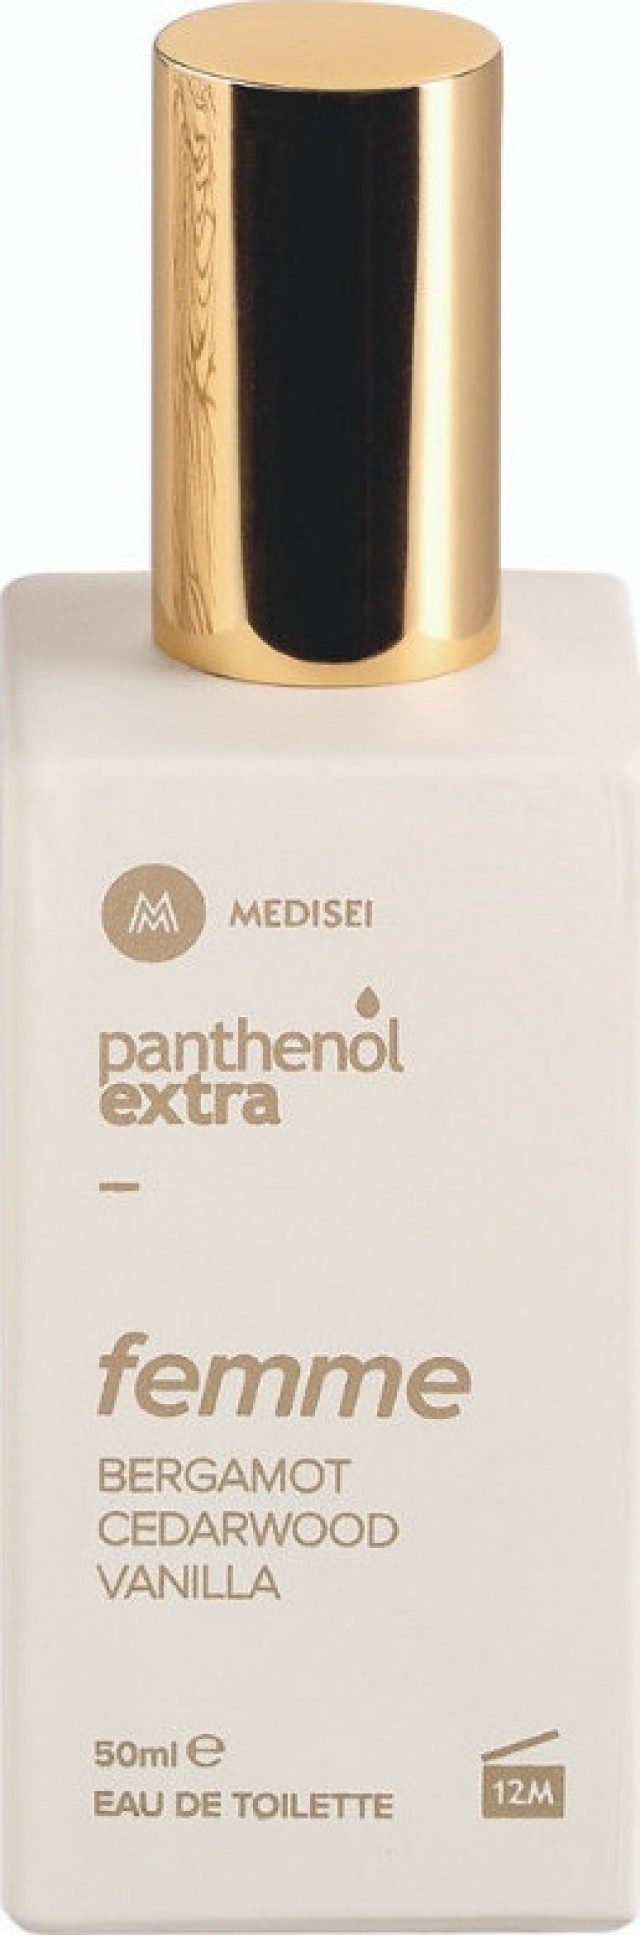 Medisei - Panthenol Extra Femme Eau de Toilette Bergamot Cedarwood Vanilla Γυναικείο Άρωμα 50ml